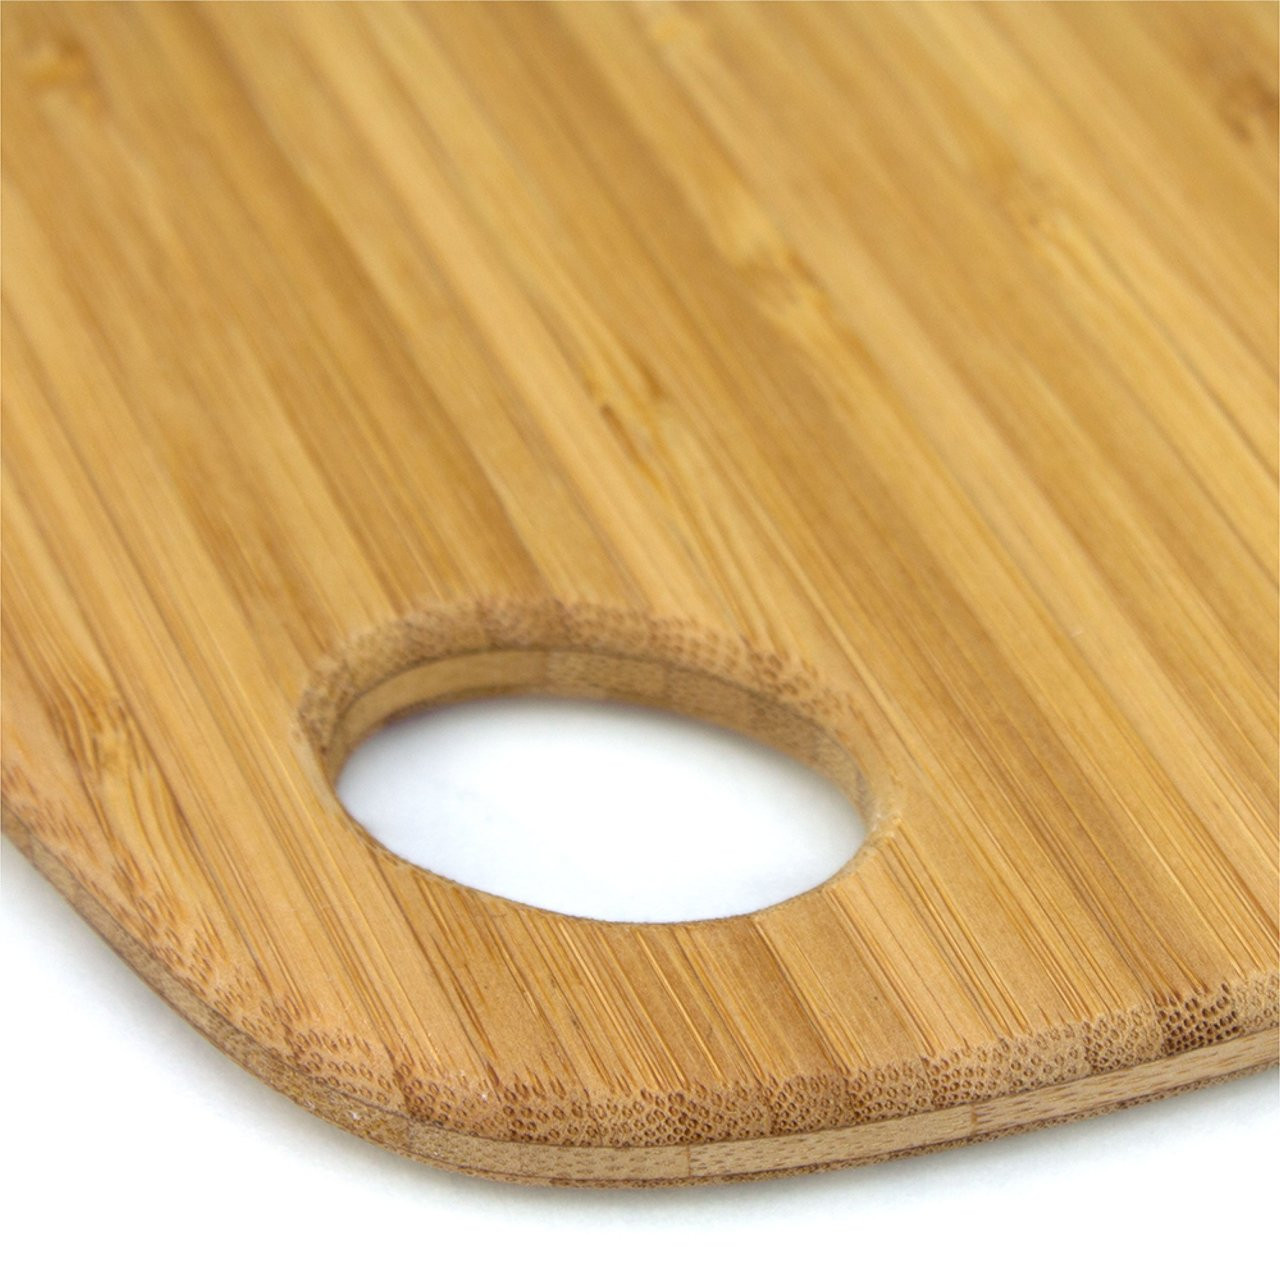 Dishwasher-Safe Bamboo Cutting Board - The Old Farmer's Store